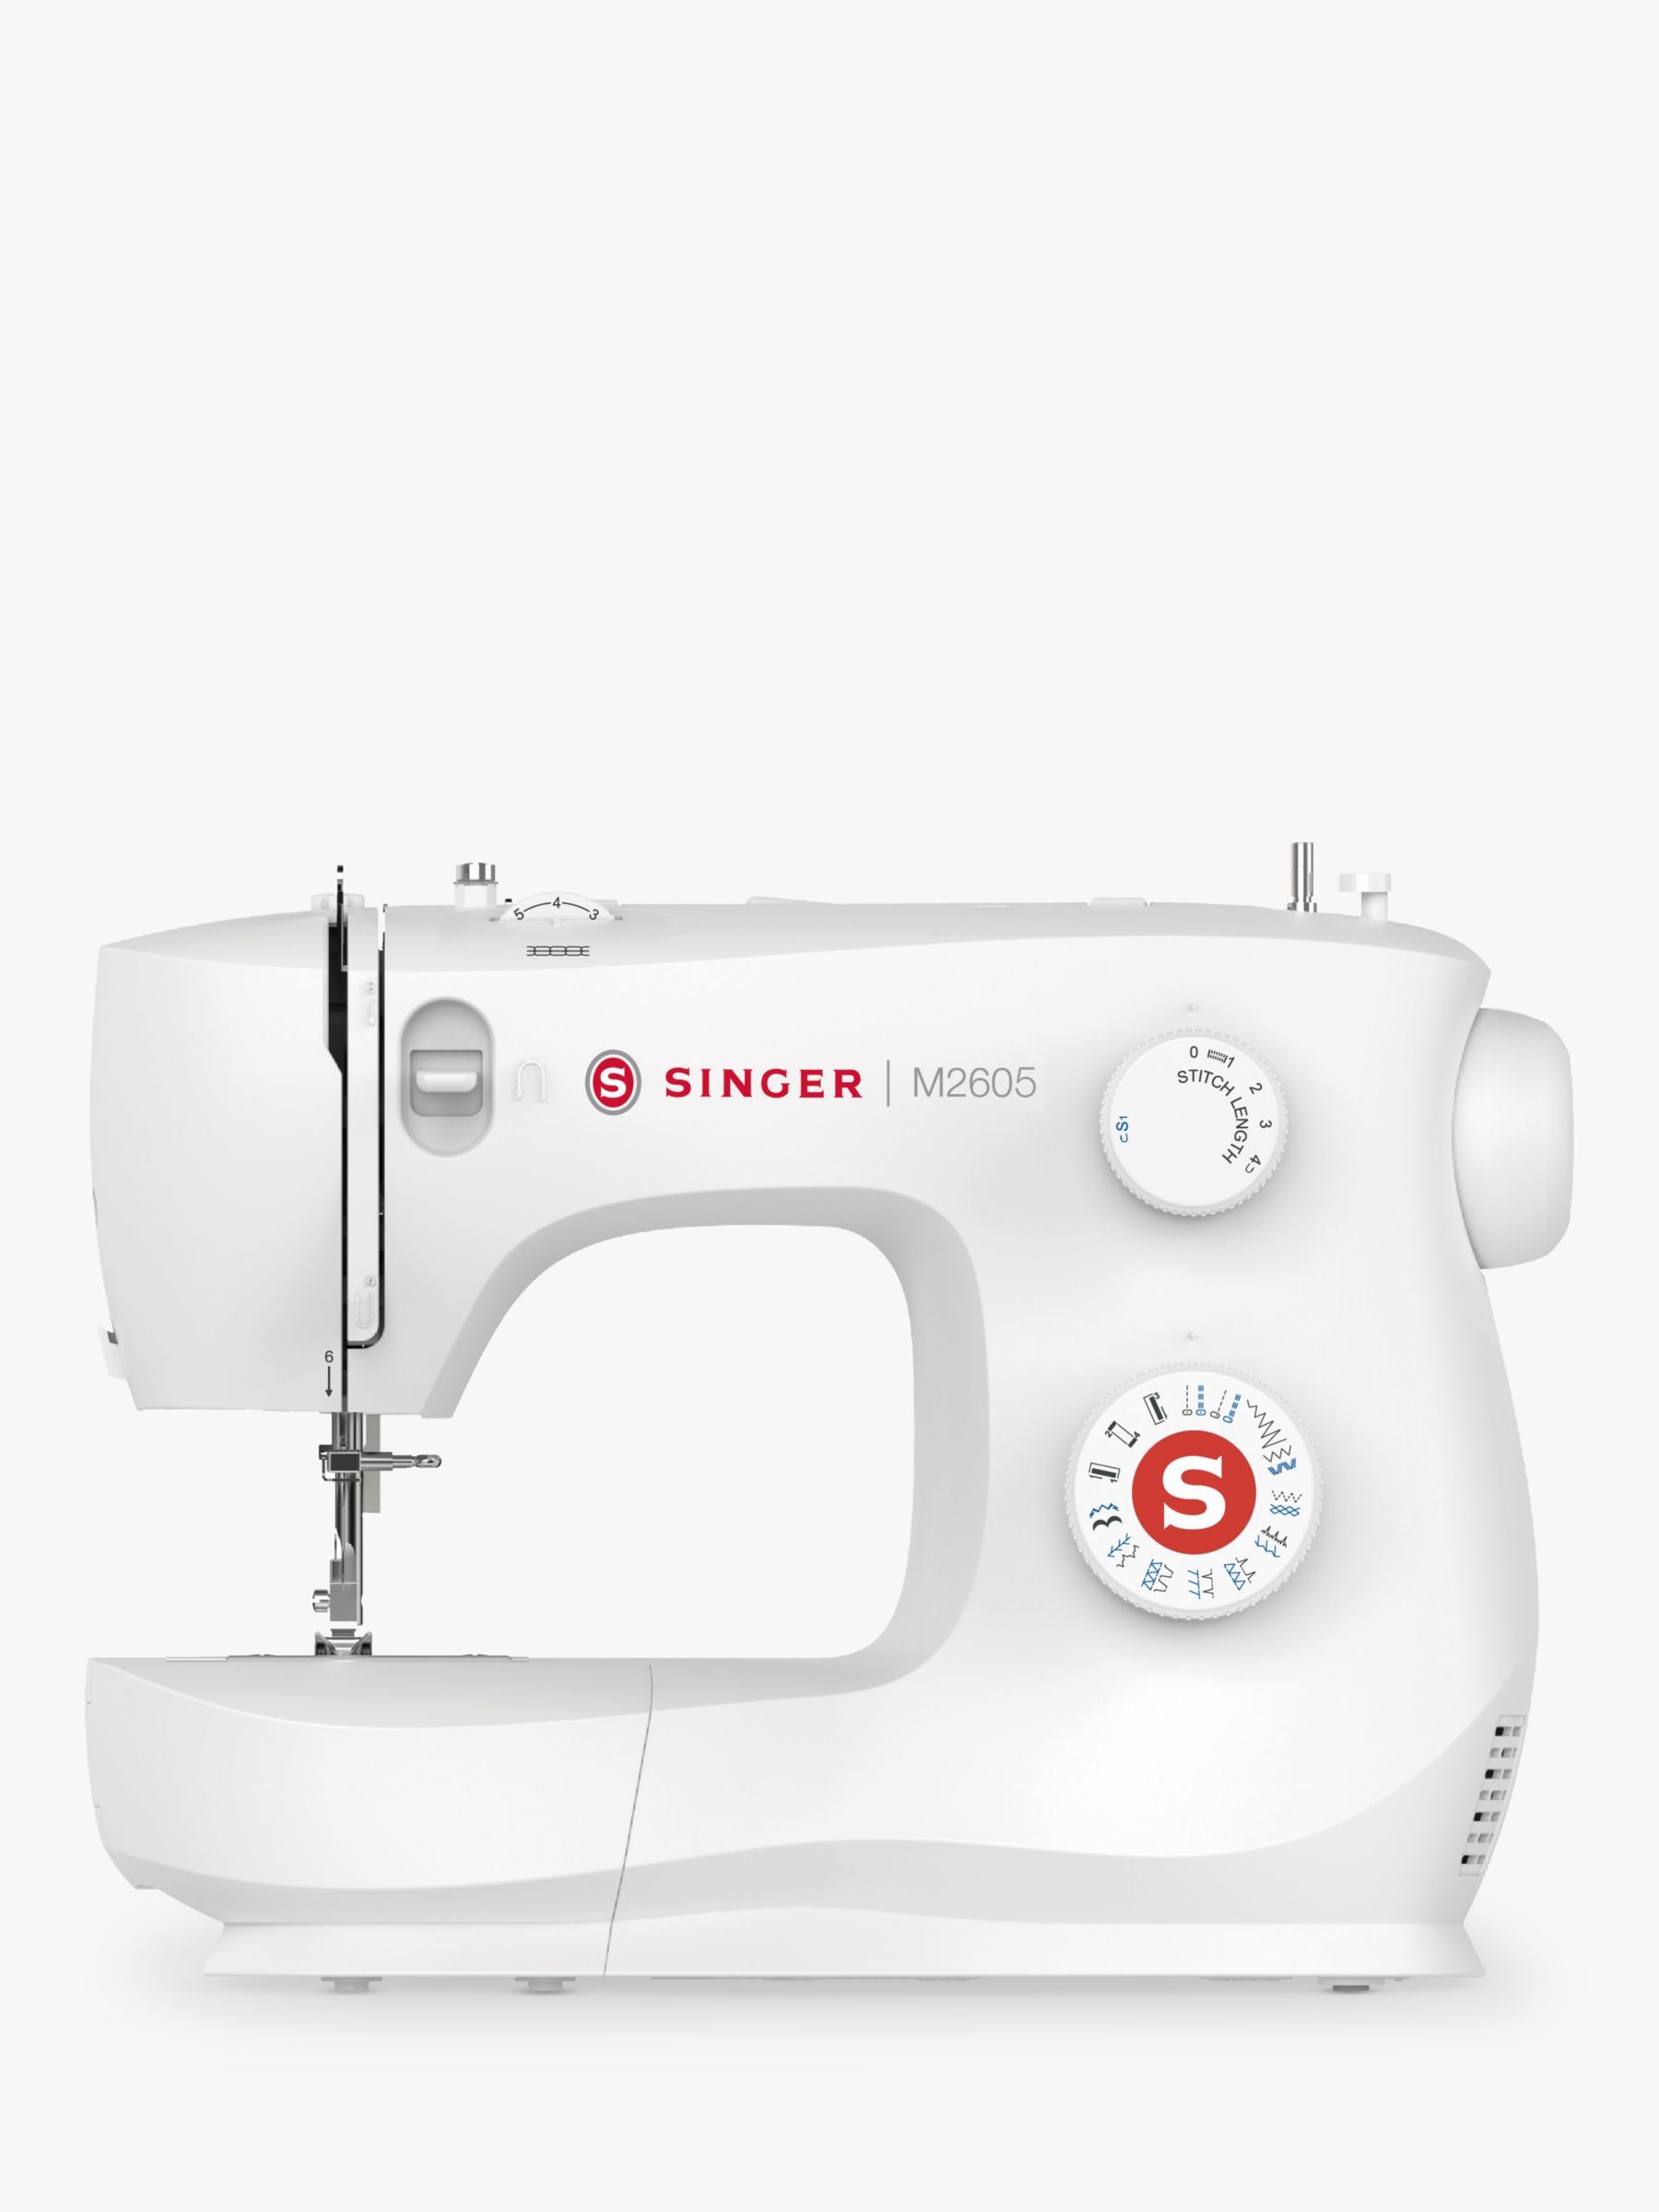 Singer Sewing Machine M2605, White - TT32 Sewing Machines